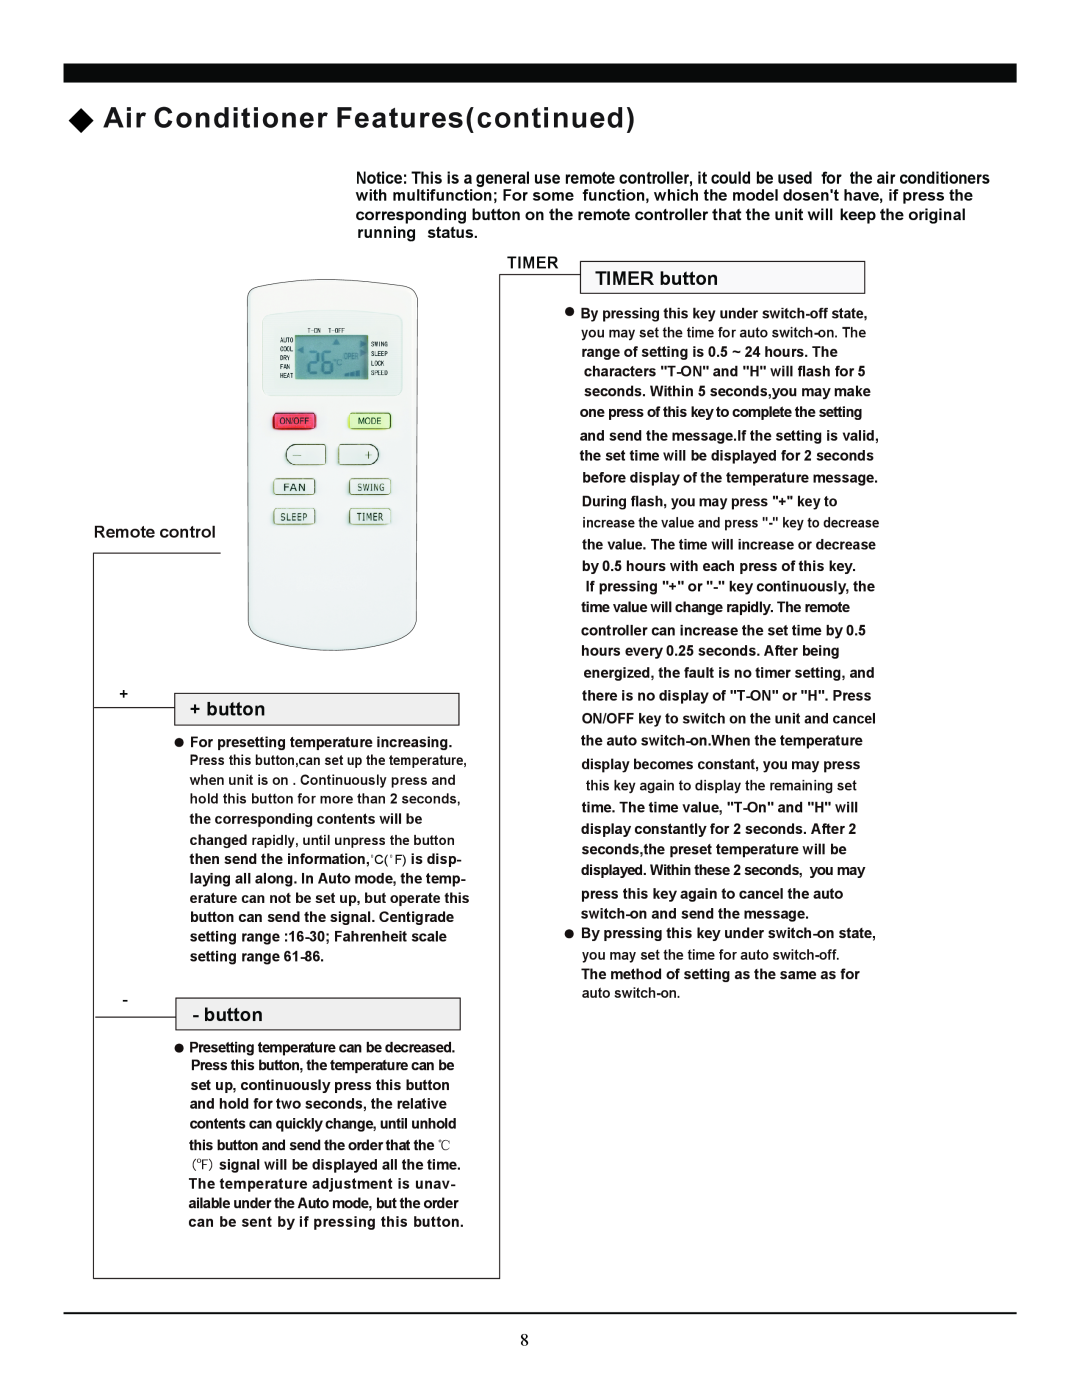 Soleus Air SG-TTW-14HC manual Air Conditioner Featurescontinued, TIMER button, + button, Timer, Remote control 